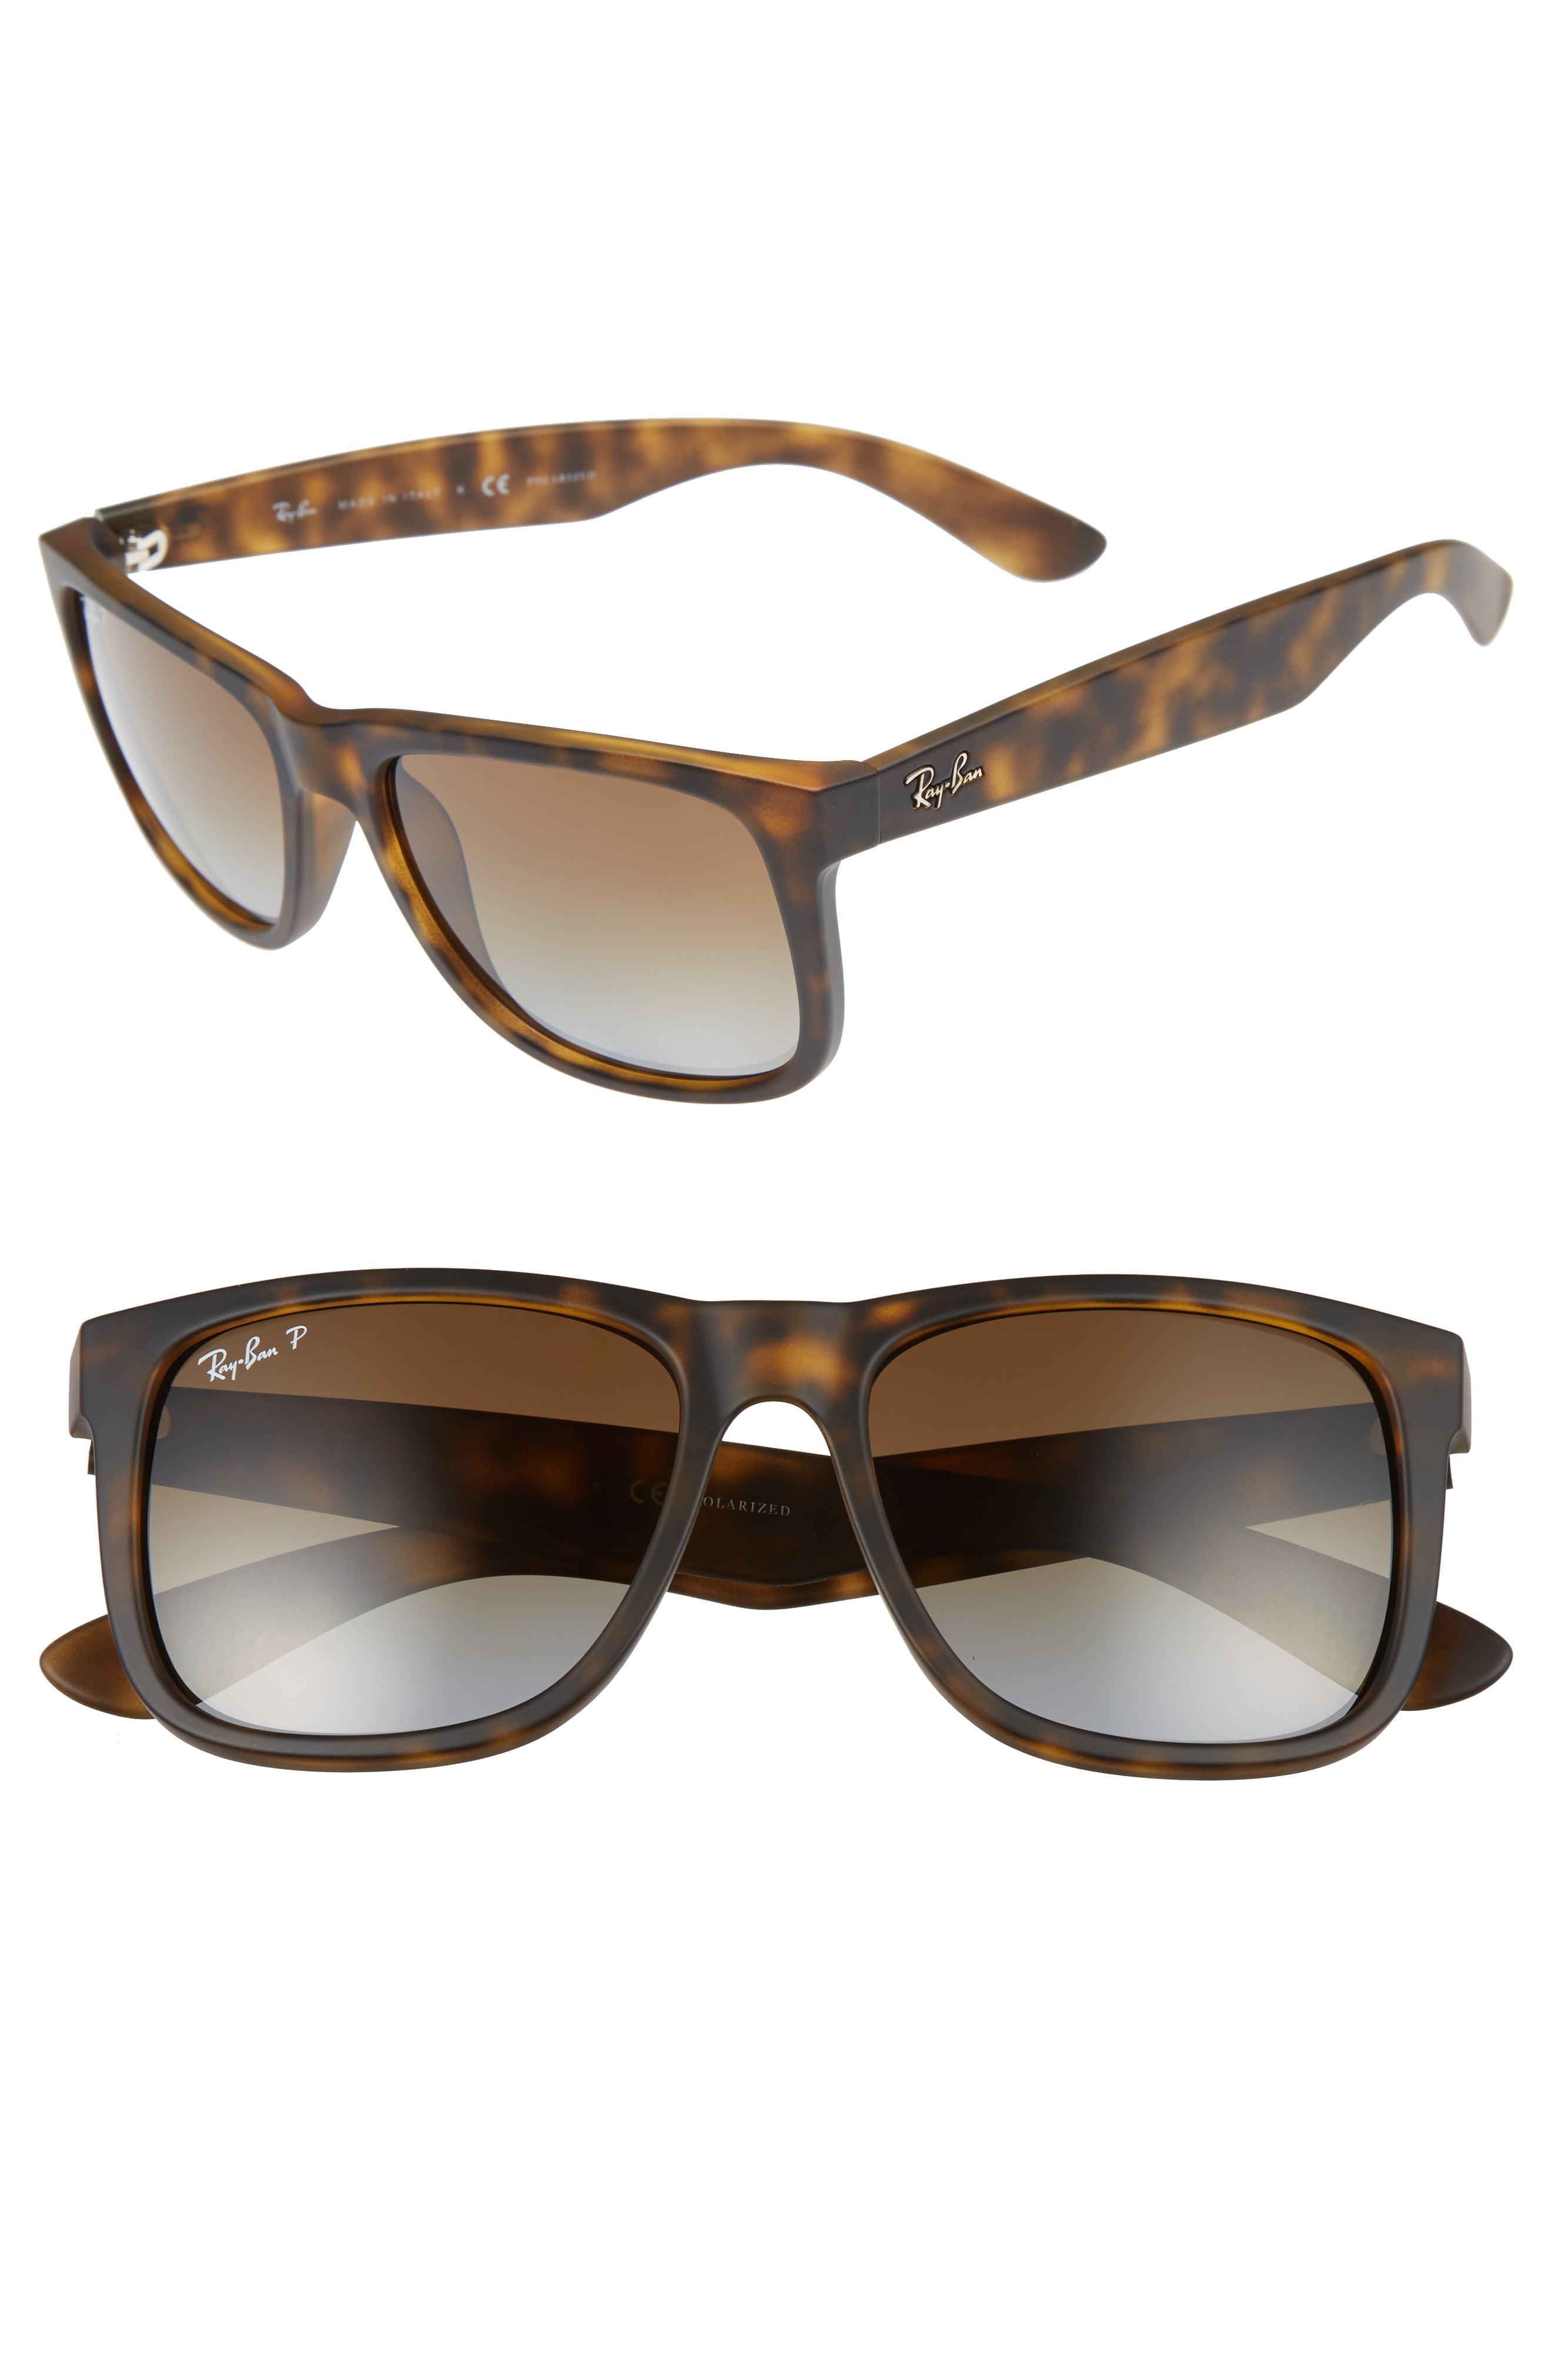 Ray Ban Justin 54mm Polarized Sunglasses 167 Nordstrom Lookastic